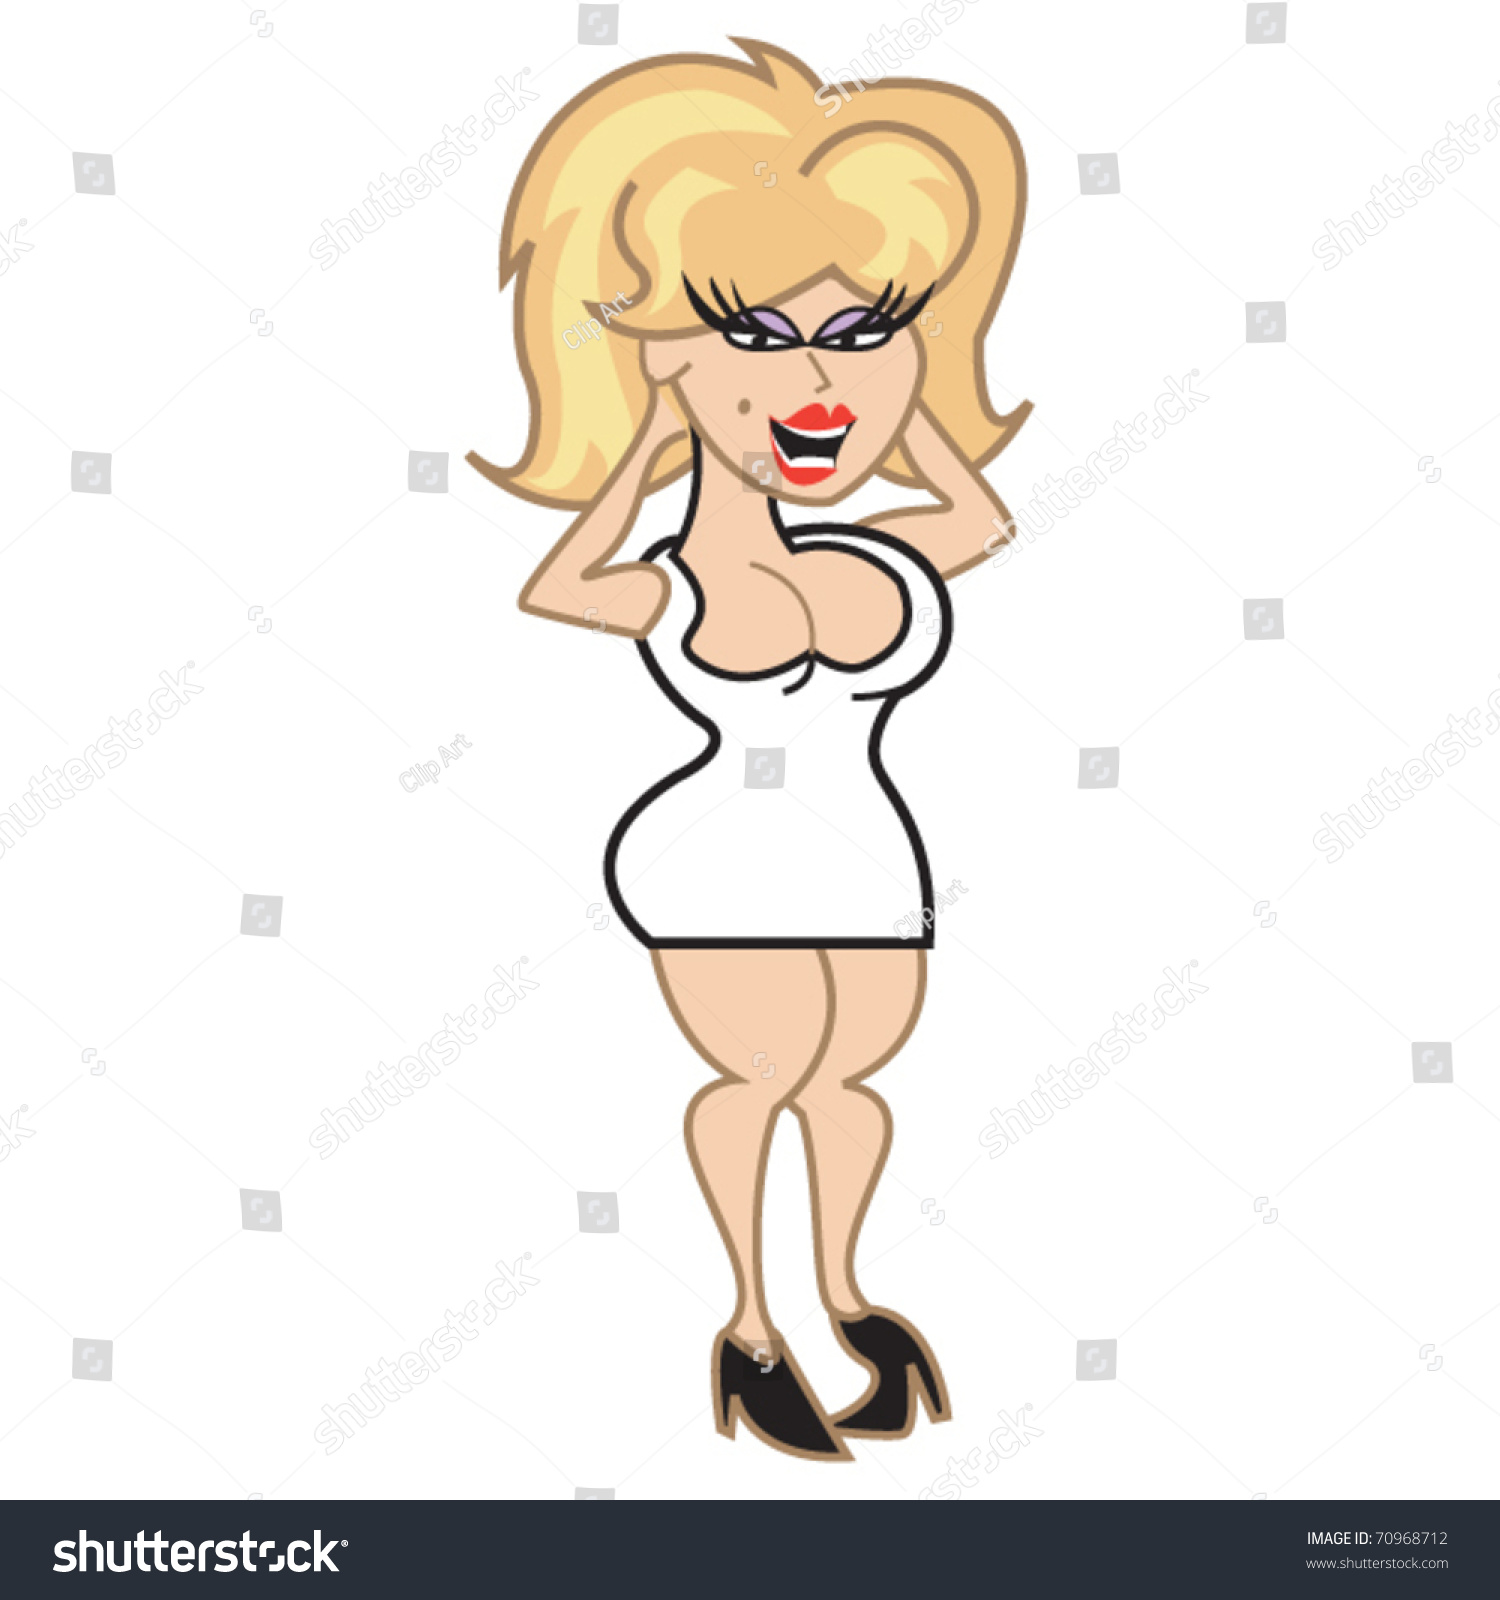 Big Tit Blonde Cartoon